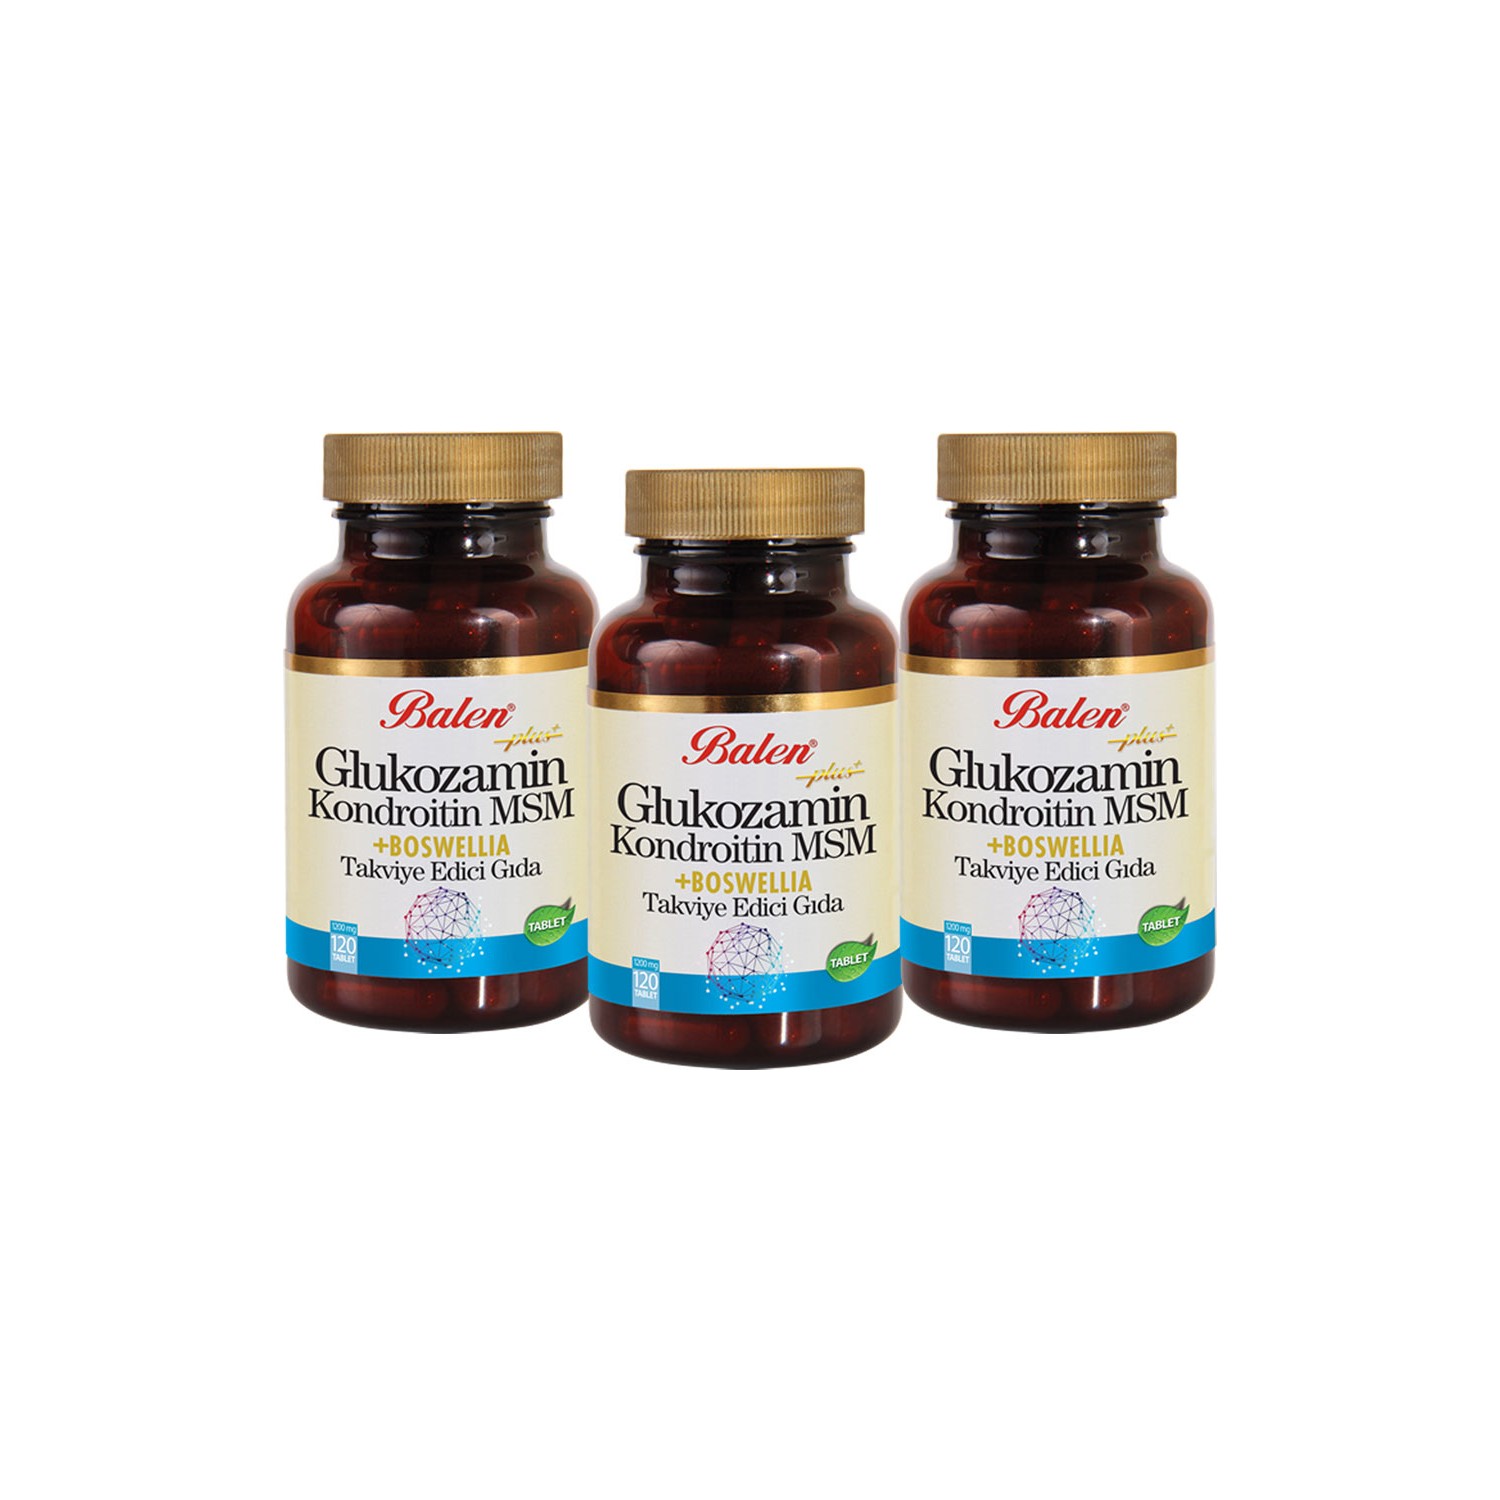 капсулы uniforce extreme omega 3 1200 mg 120 шт Активная добавка глюкозамин Balen Chondroitin Msm Boswellia, 120 капсул, 1200 мг, 3 штуки